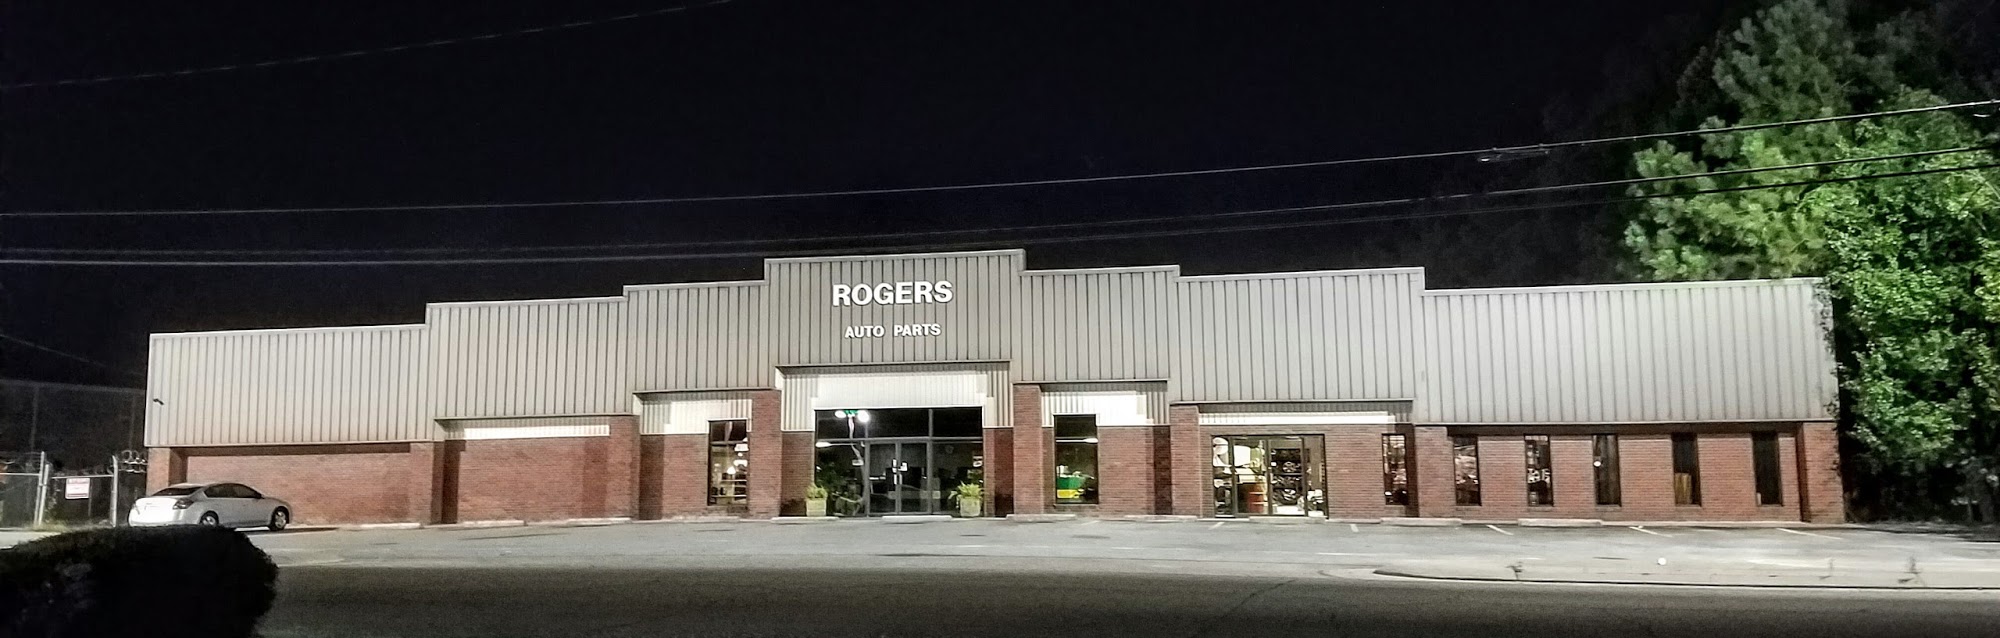 Rogers Auto Parts